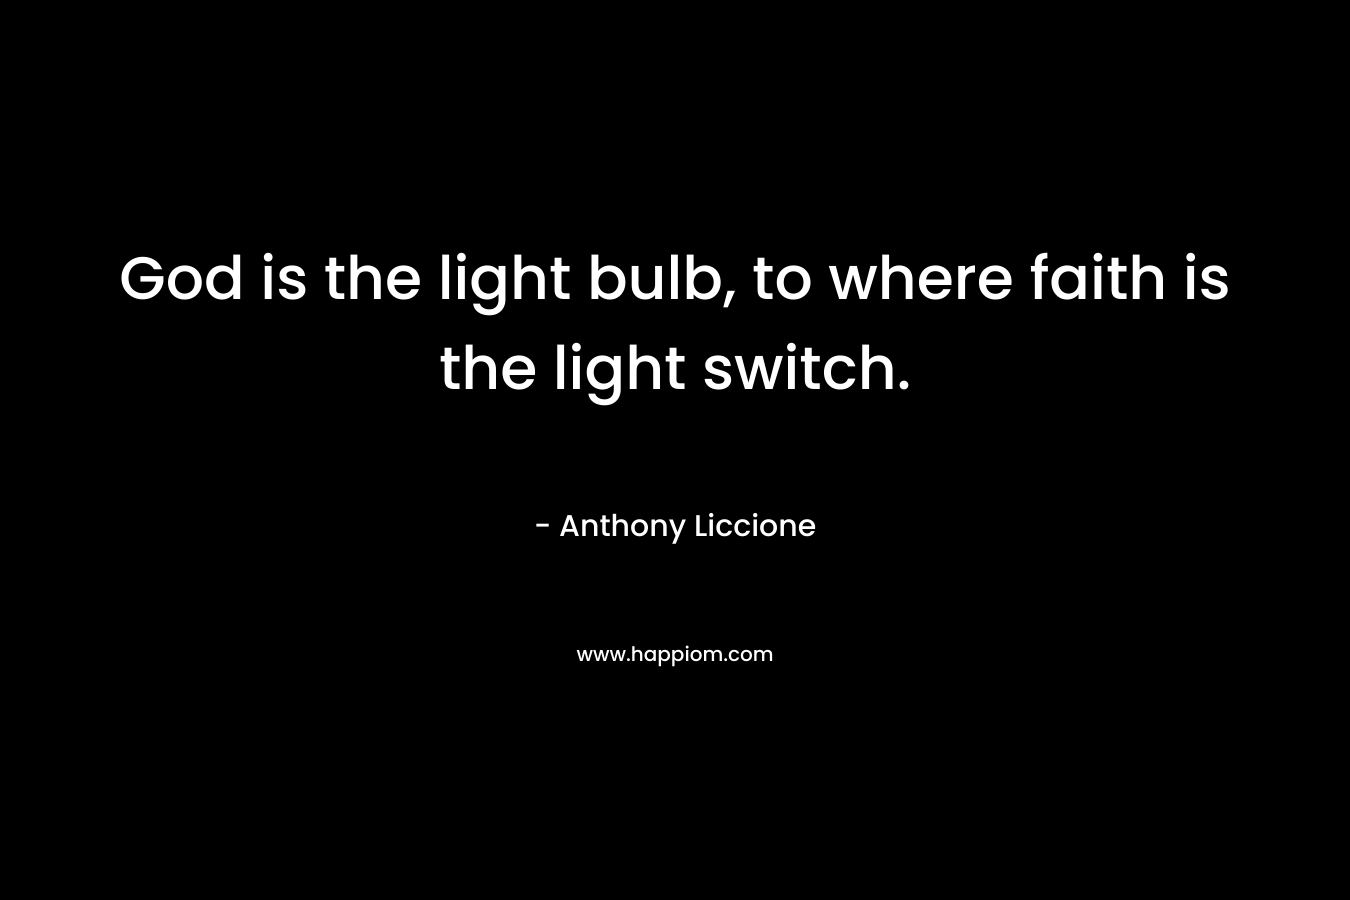 God is the light bulb, to where faith is the light switch.